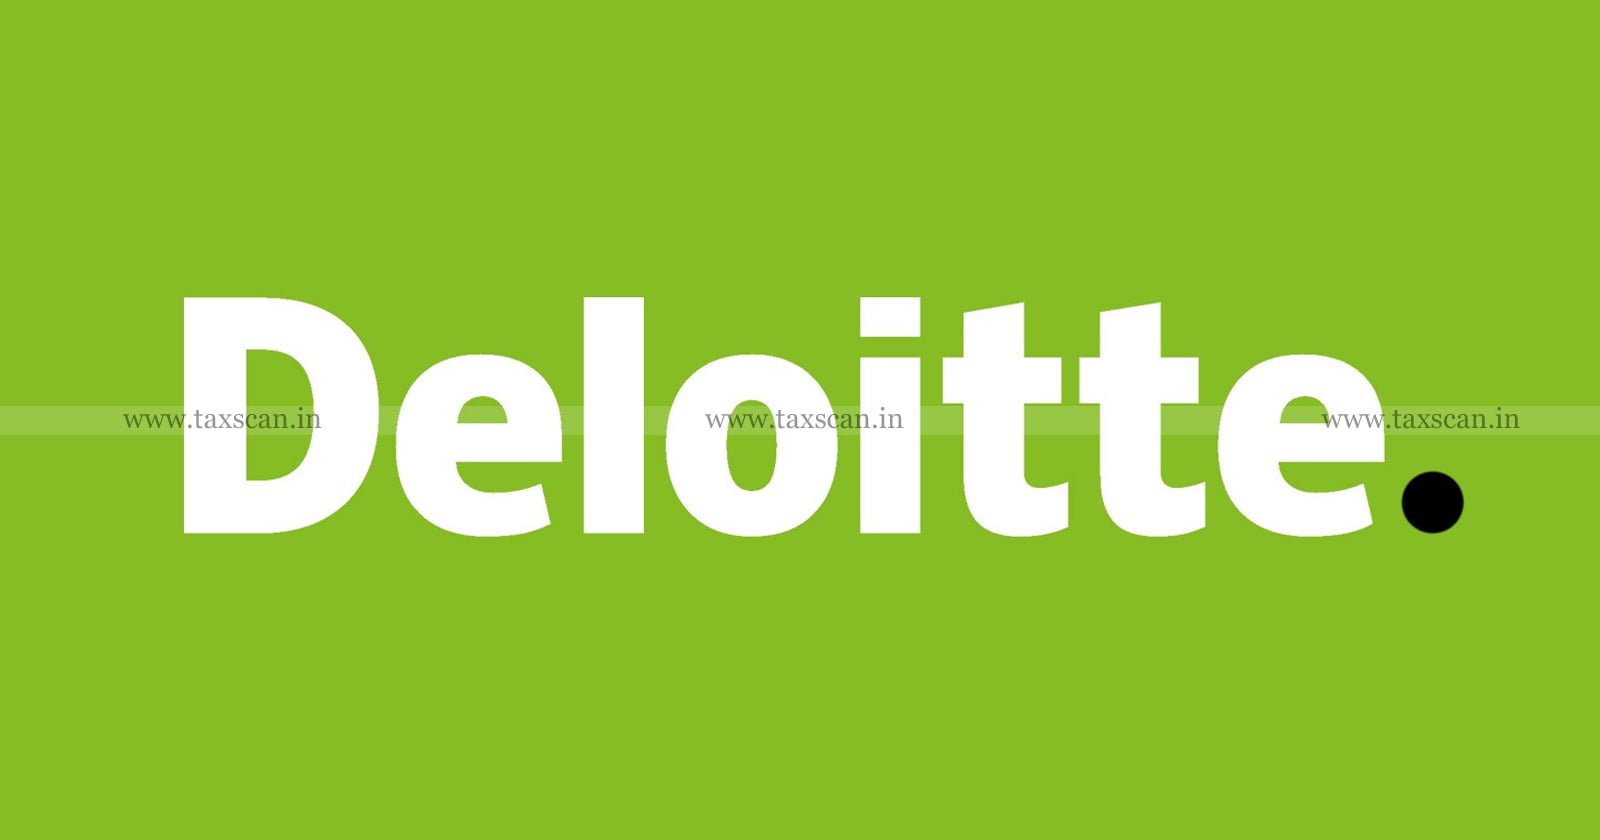 Deloitte - CESTAT - Service - Tax - Refund - Claim - TAXSCAN